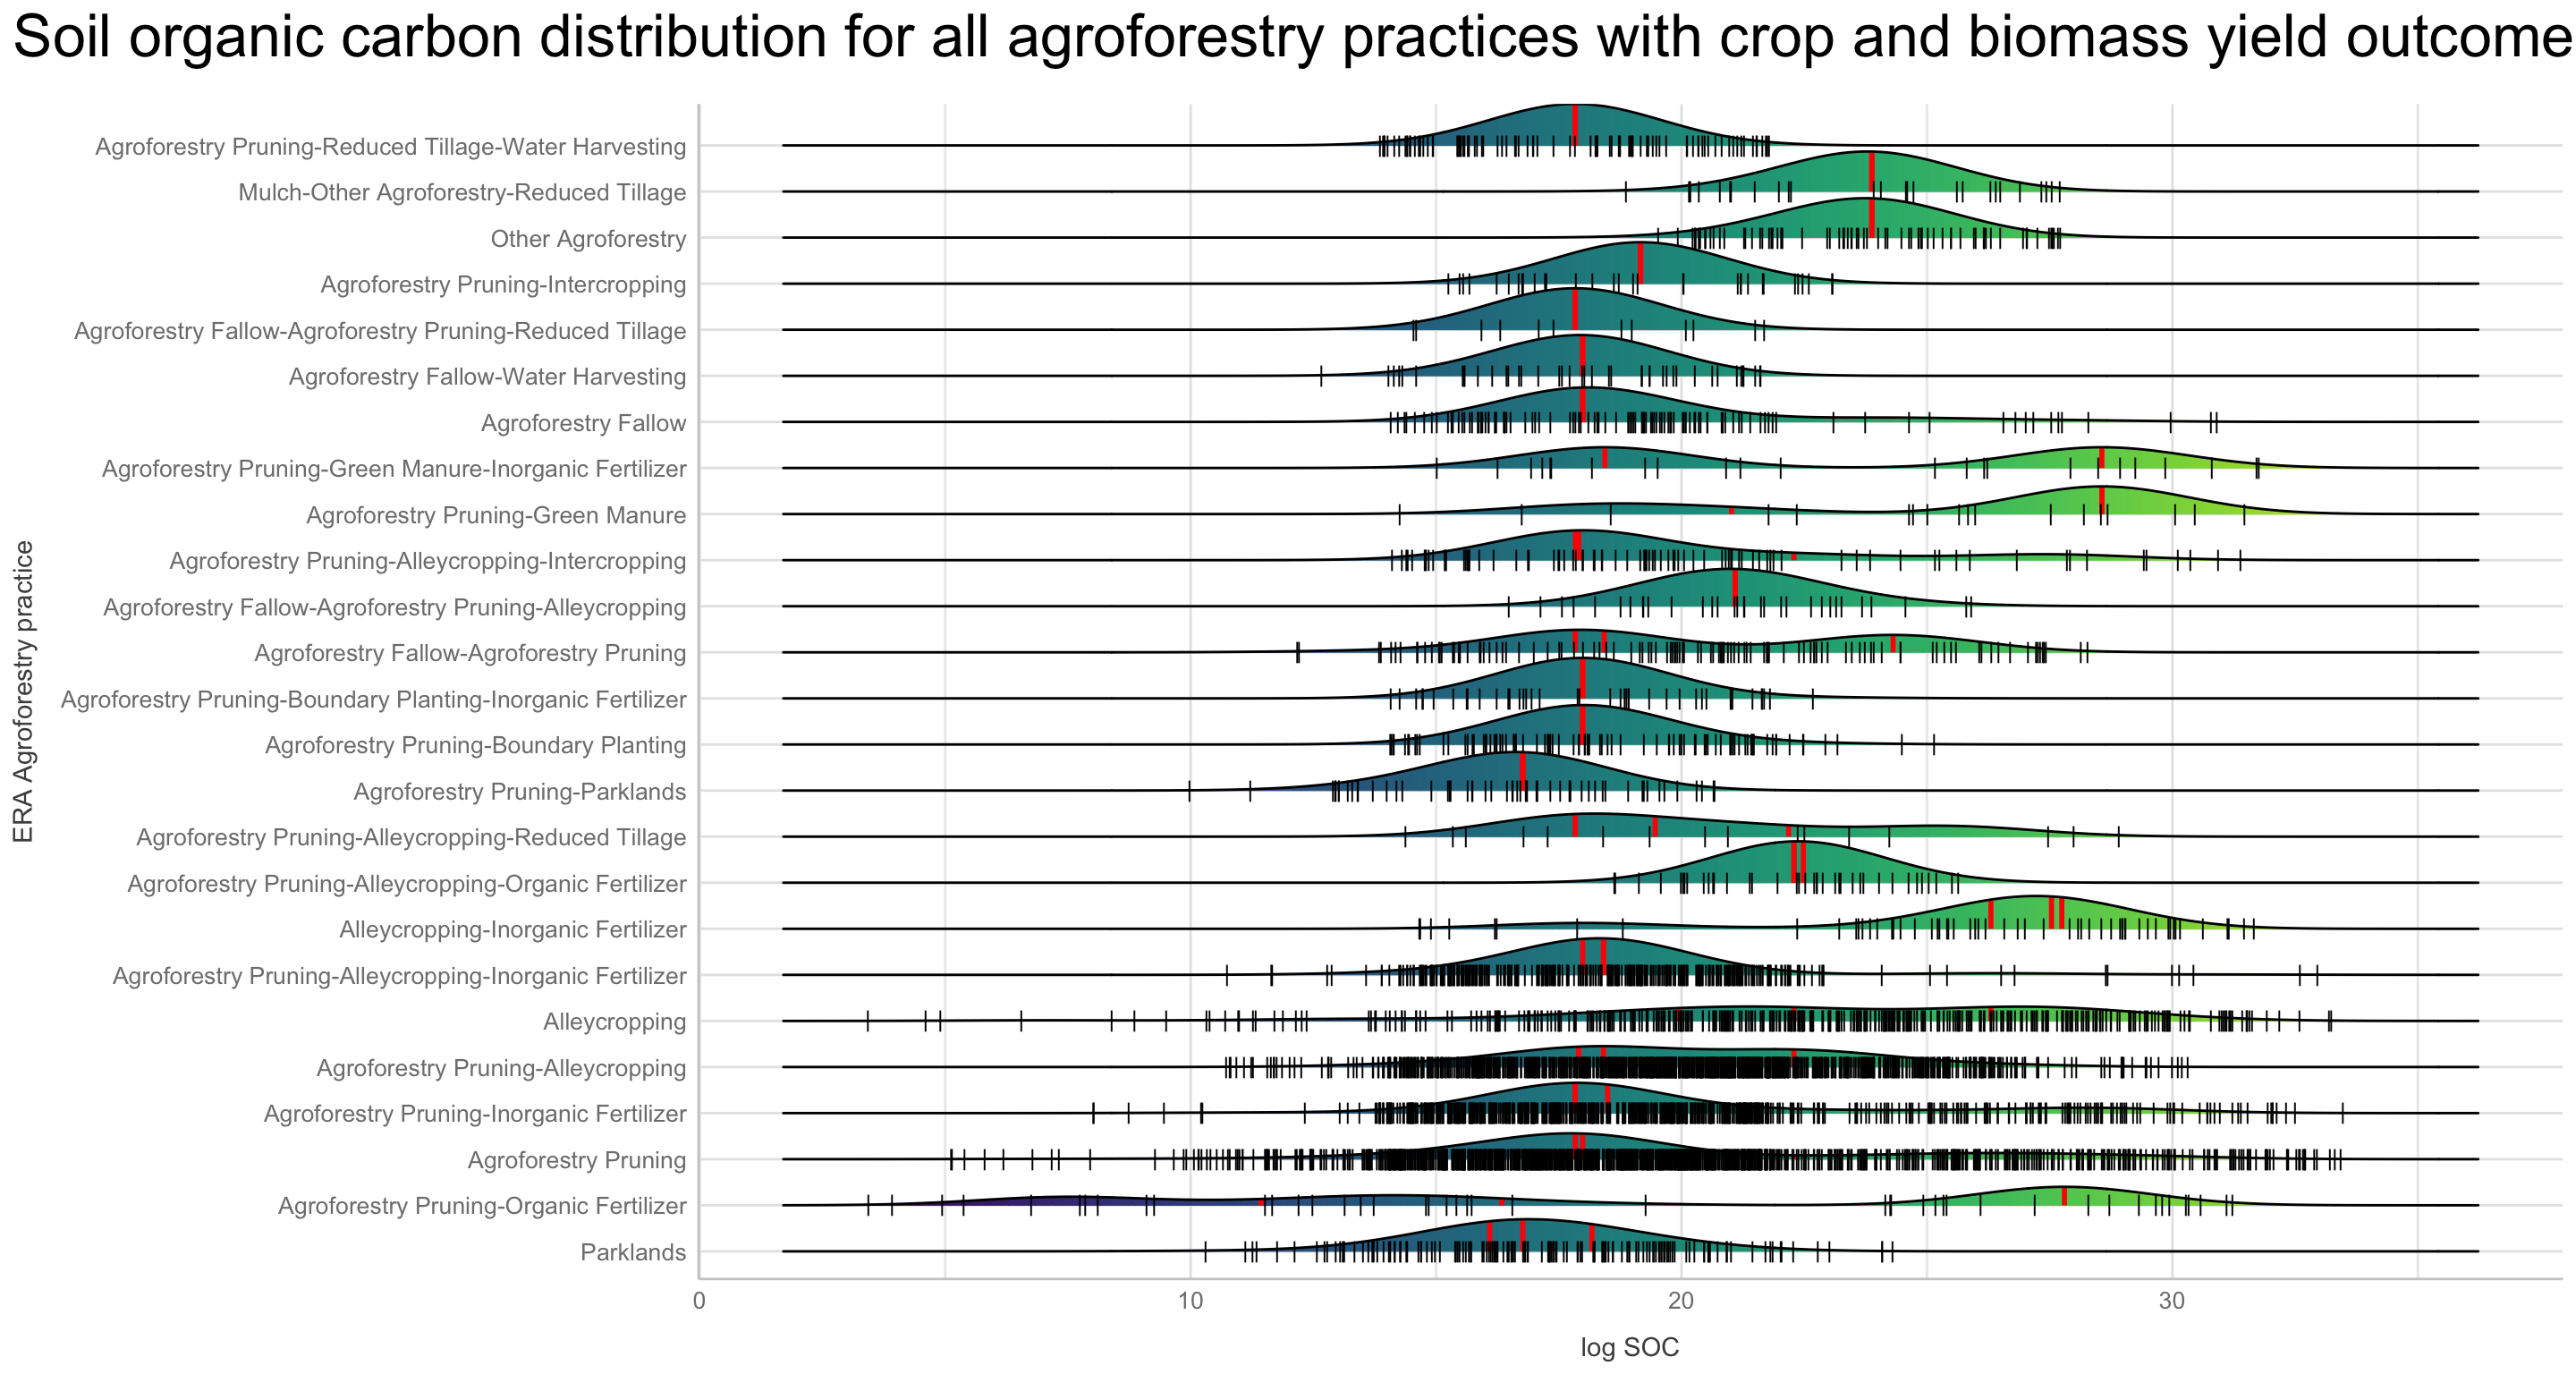 Density ridge plot forsoil organic carbon distribution across all agroforestry practices